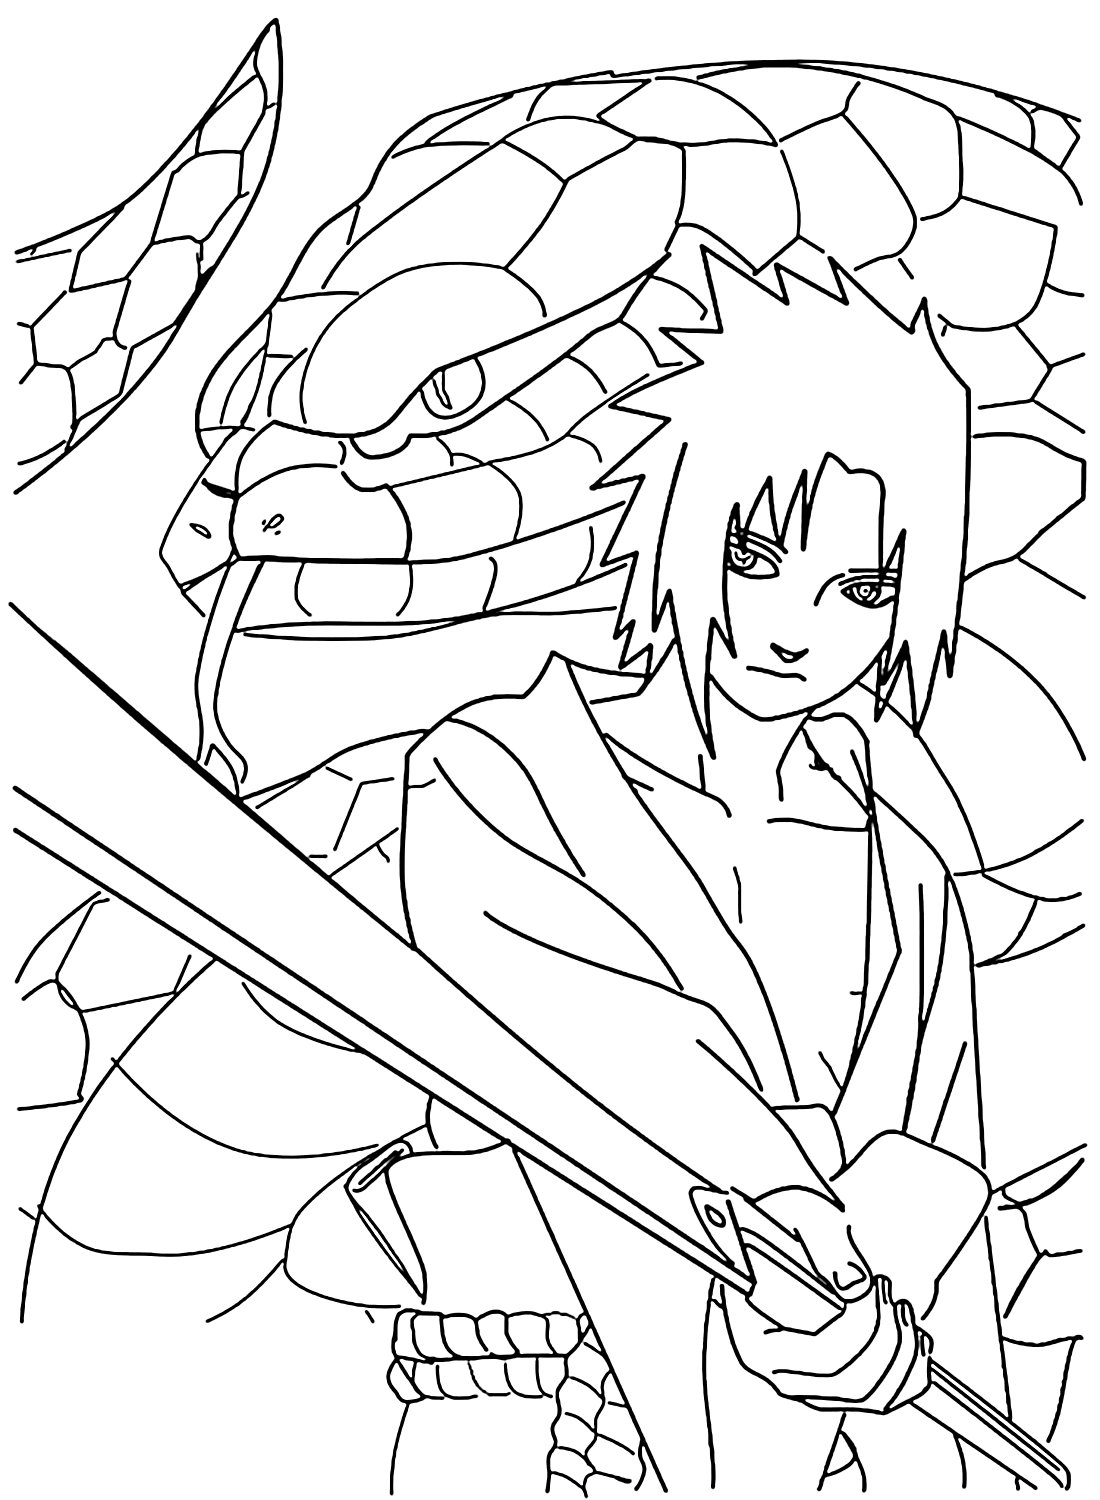 Sasuke and Snake Coloring Pictures from Sasuke